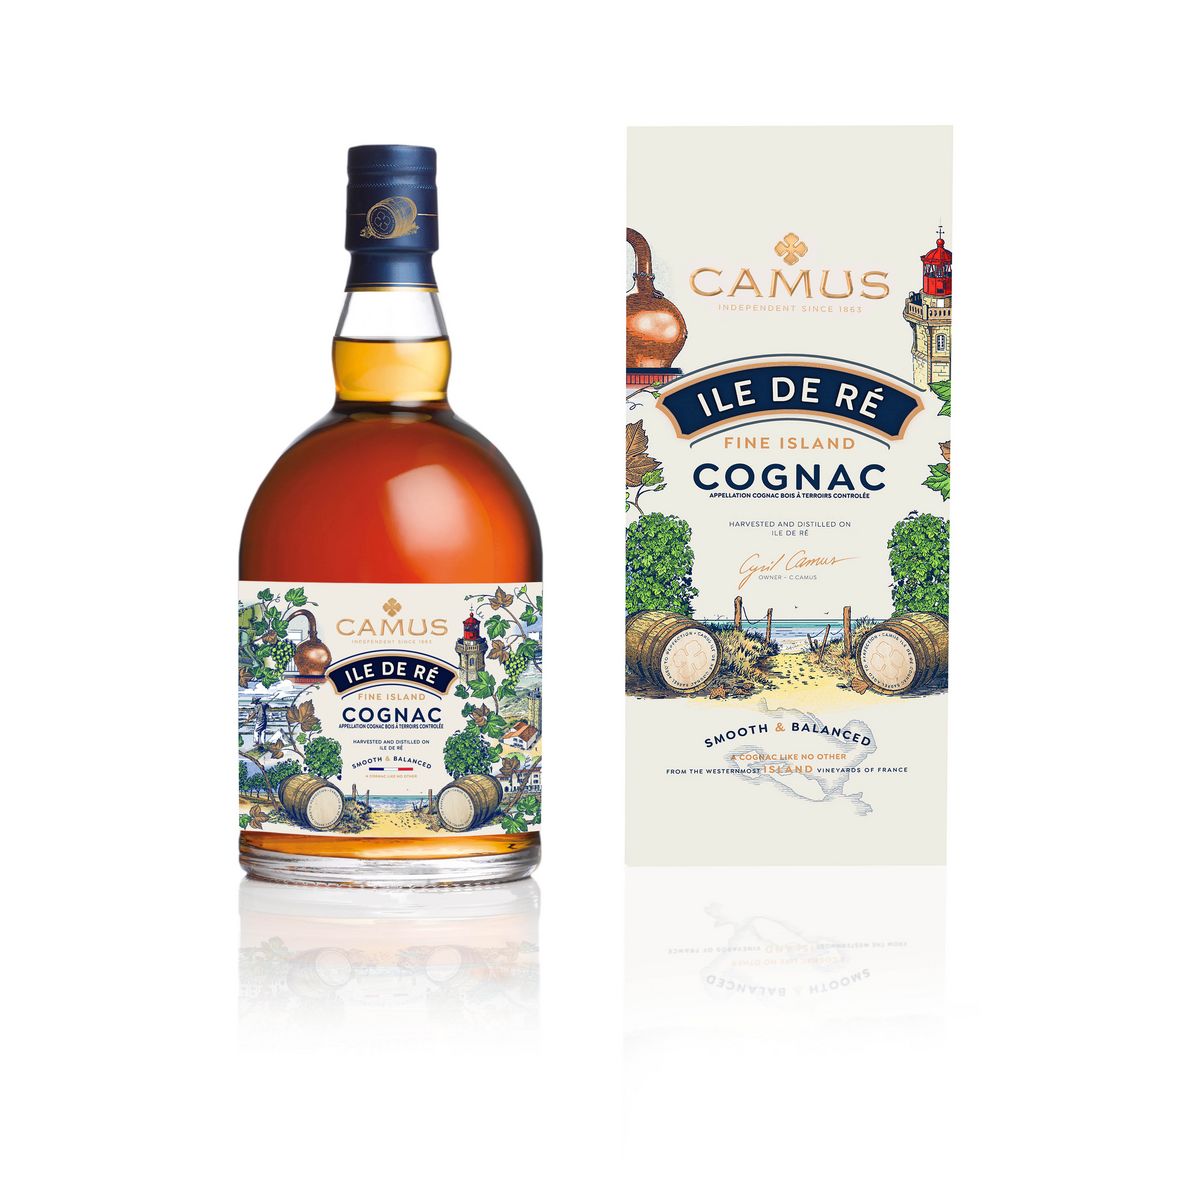 CAMUS Cognac fine Island de l'Ile de Ré 40% 70cl